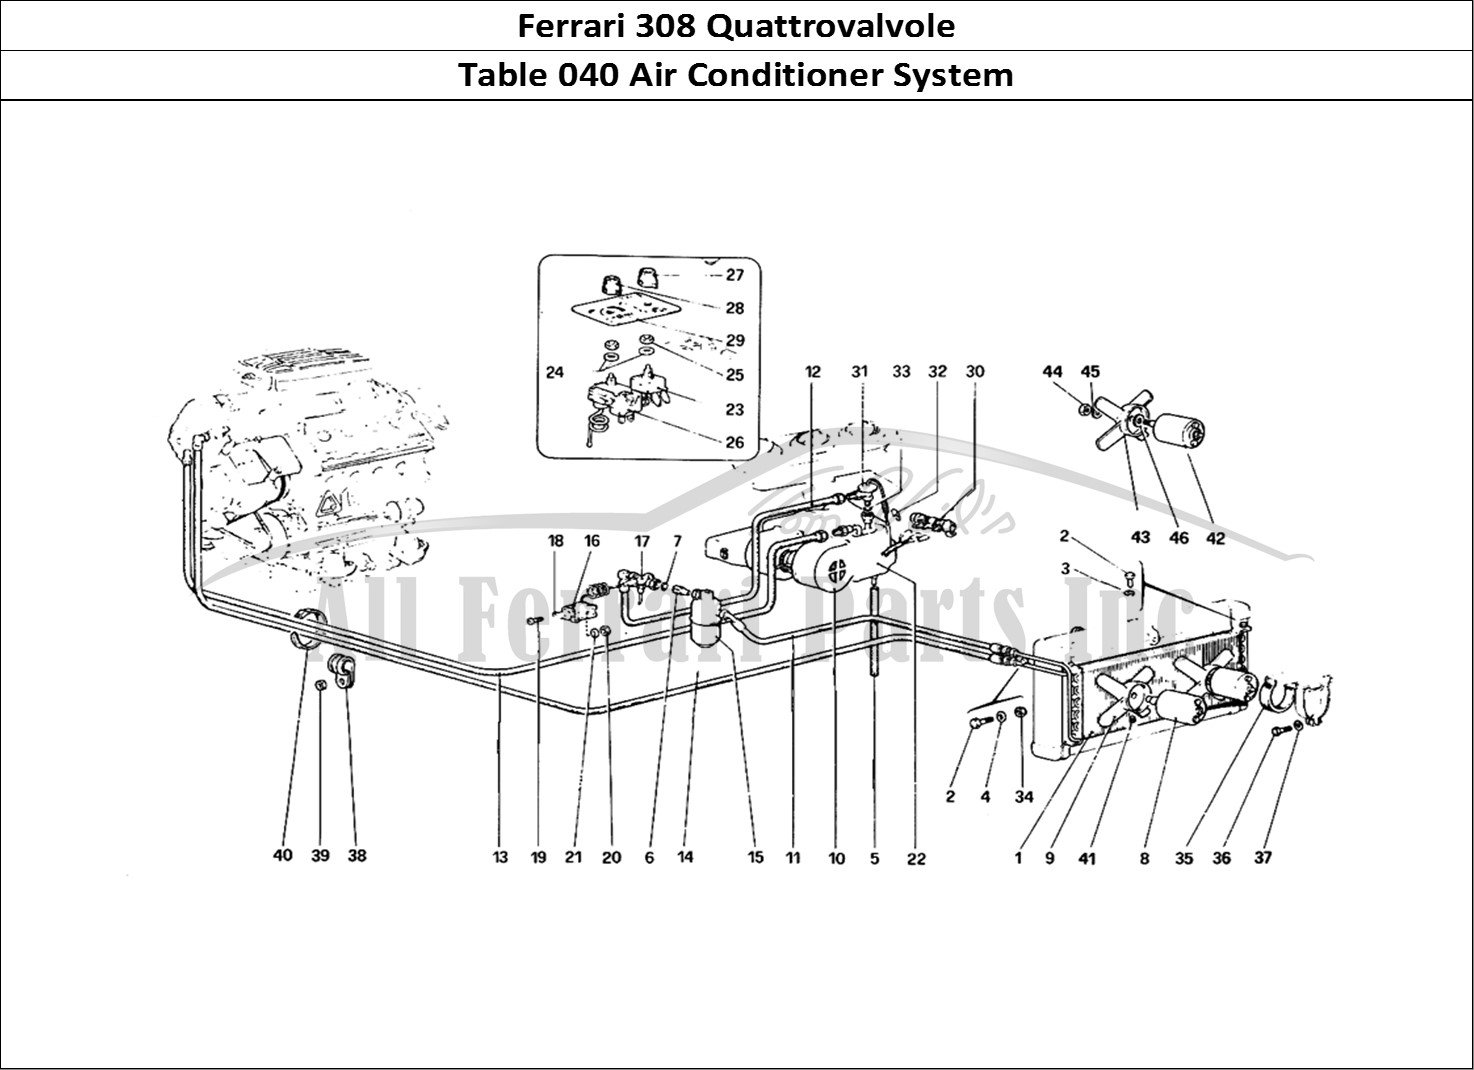 Ferrari Parts Ferrari 308 Quattrovalvole (1985) Page 040 Air Conditioning System